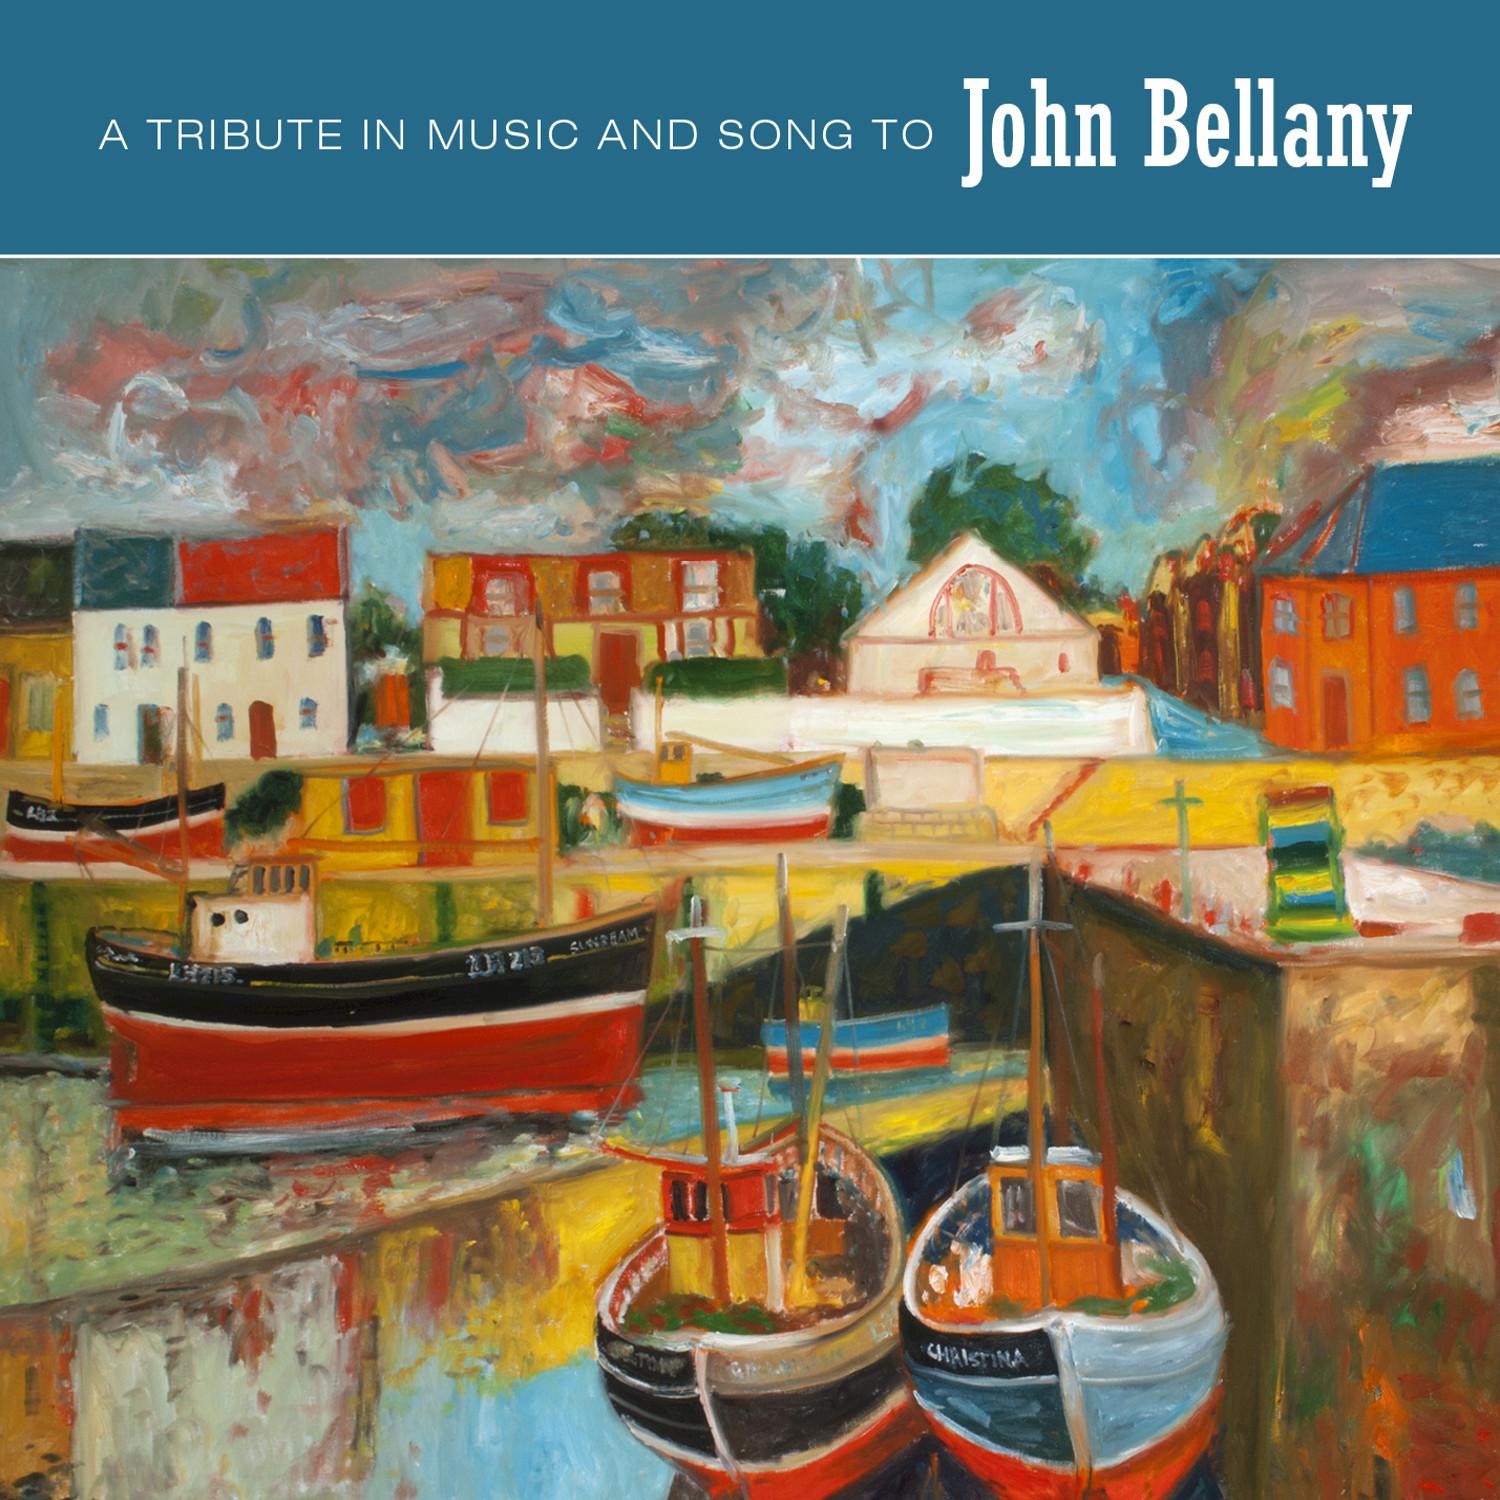 The Reel John Bellany